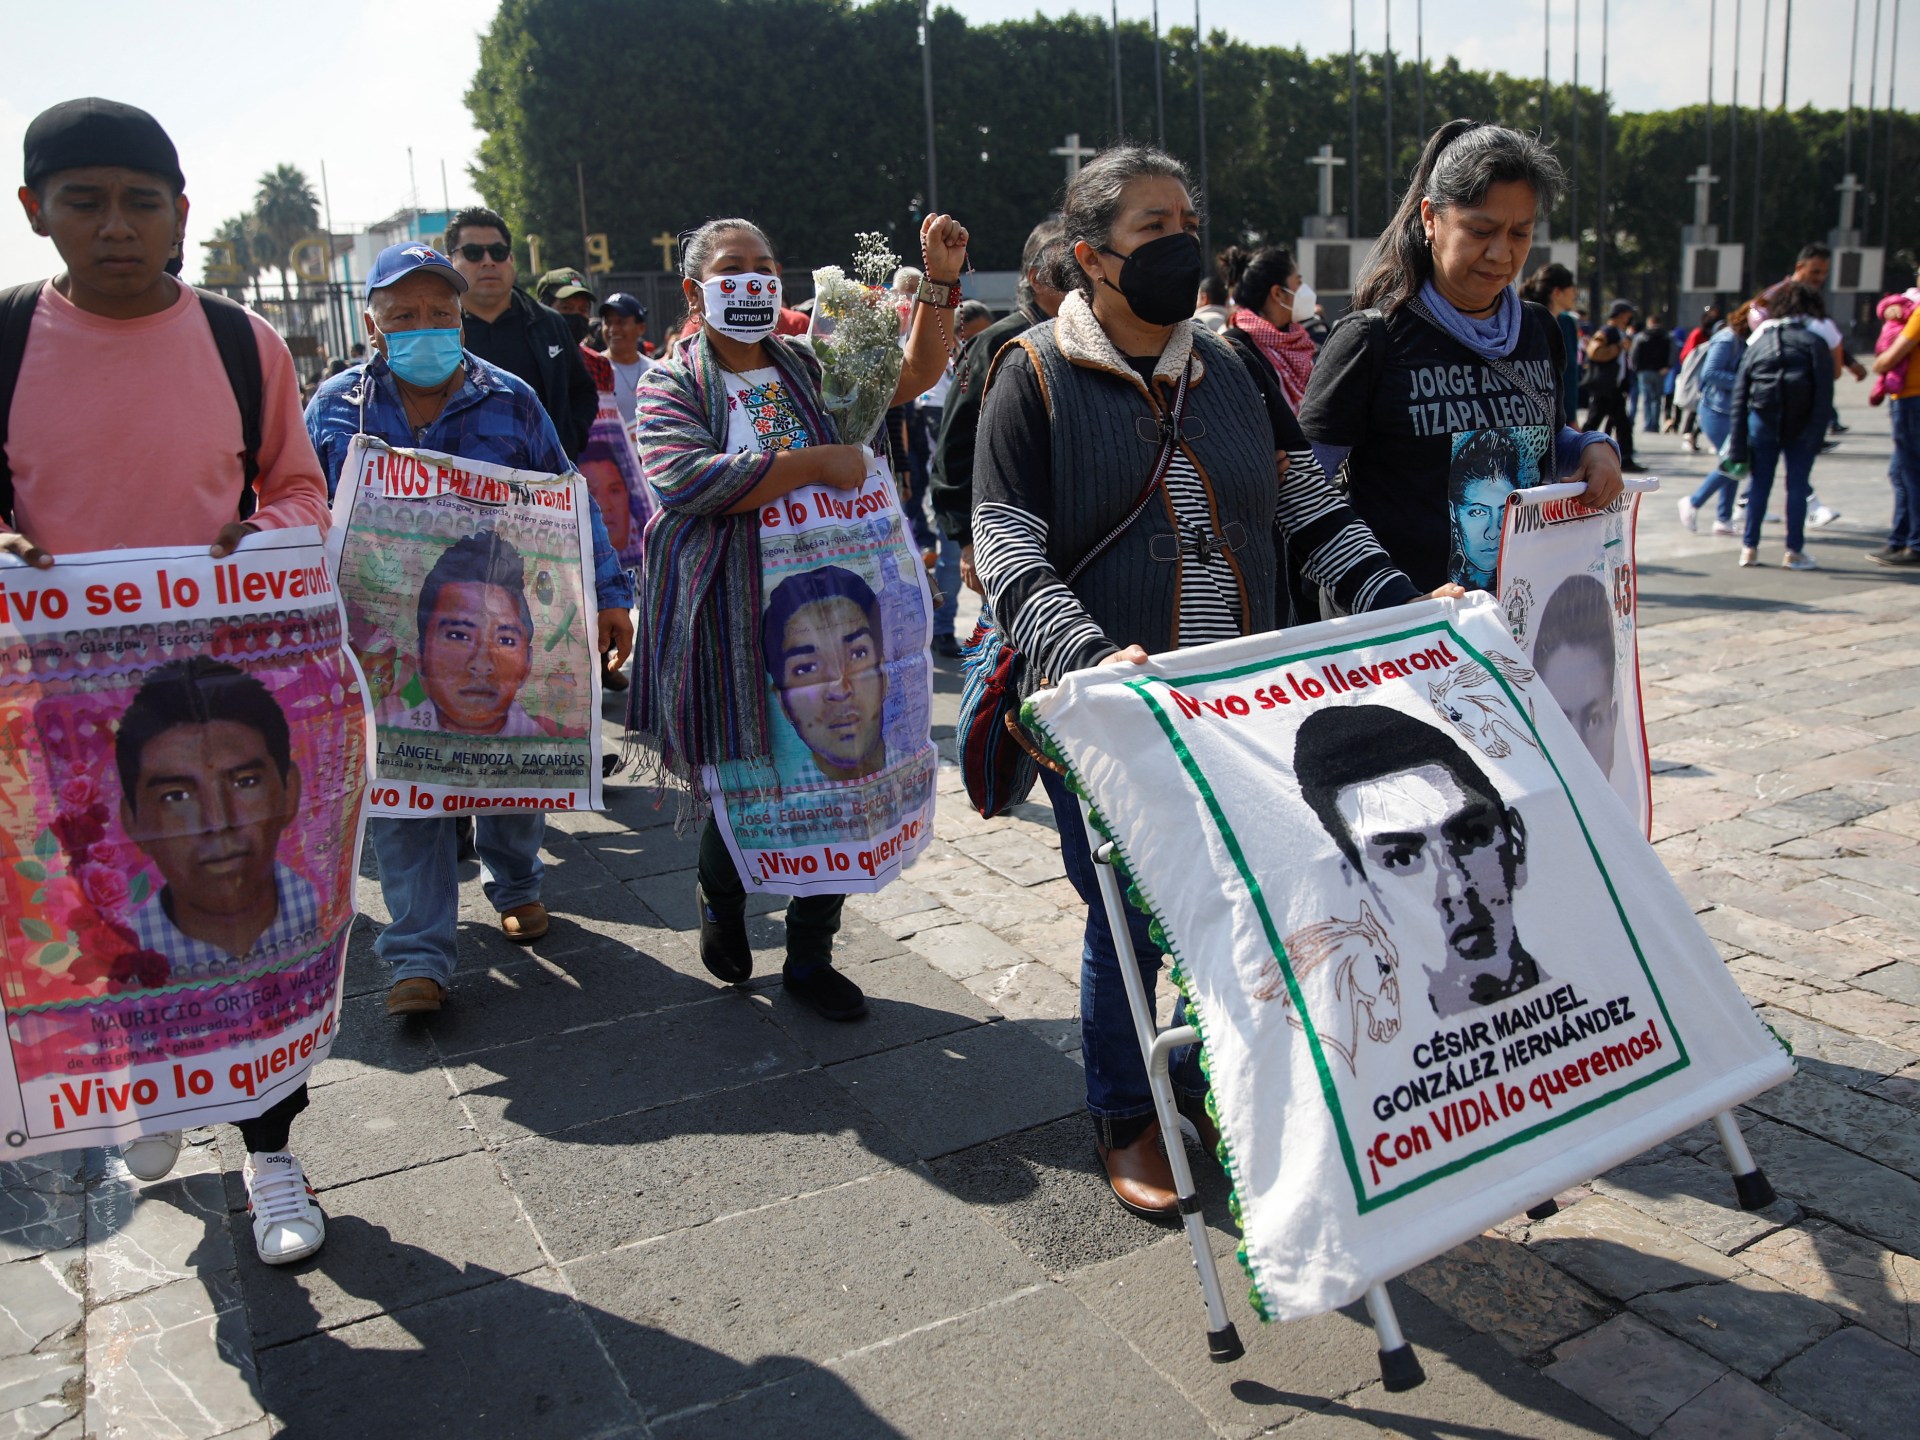 Mantan kepala anti-penculikan ditangkap dalam kasus Ayotzinapa Meksiko |  Berita Kejahatan